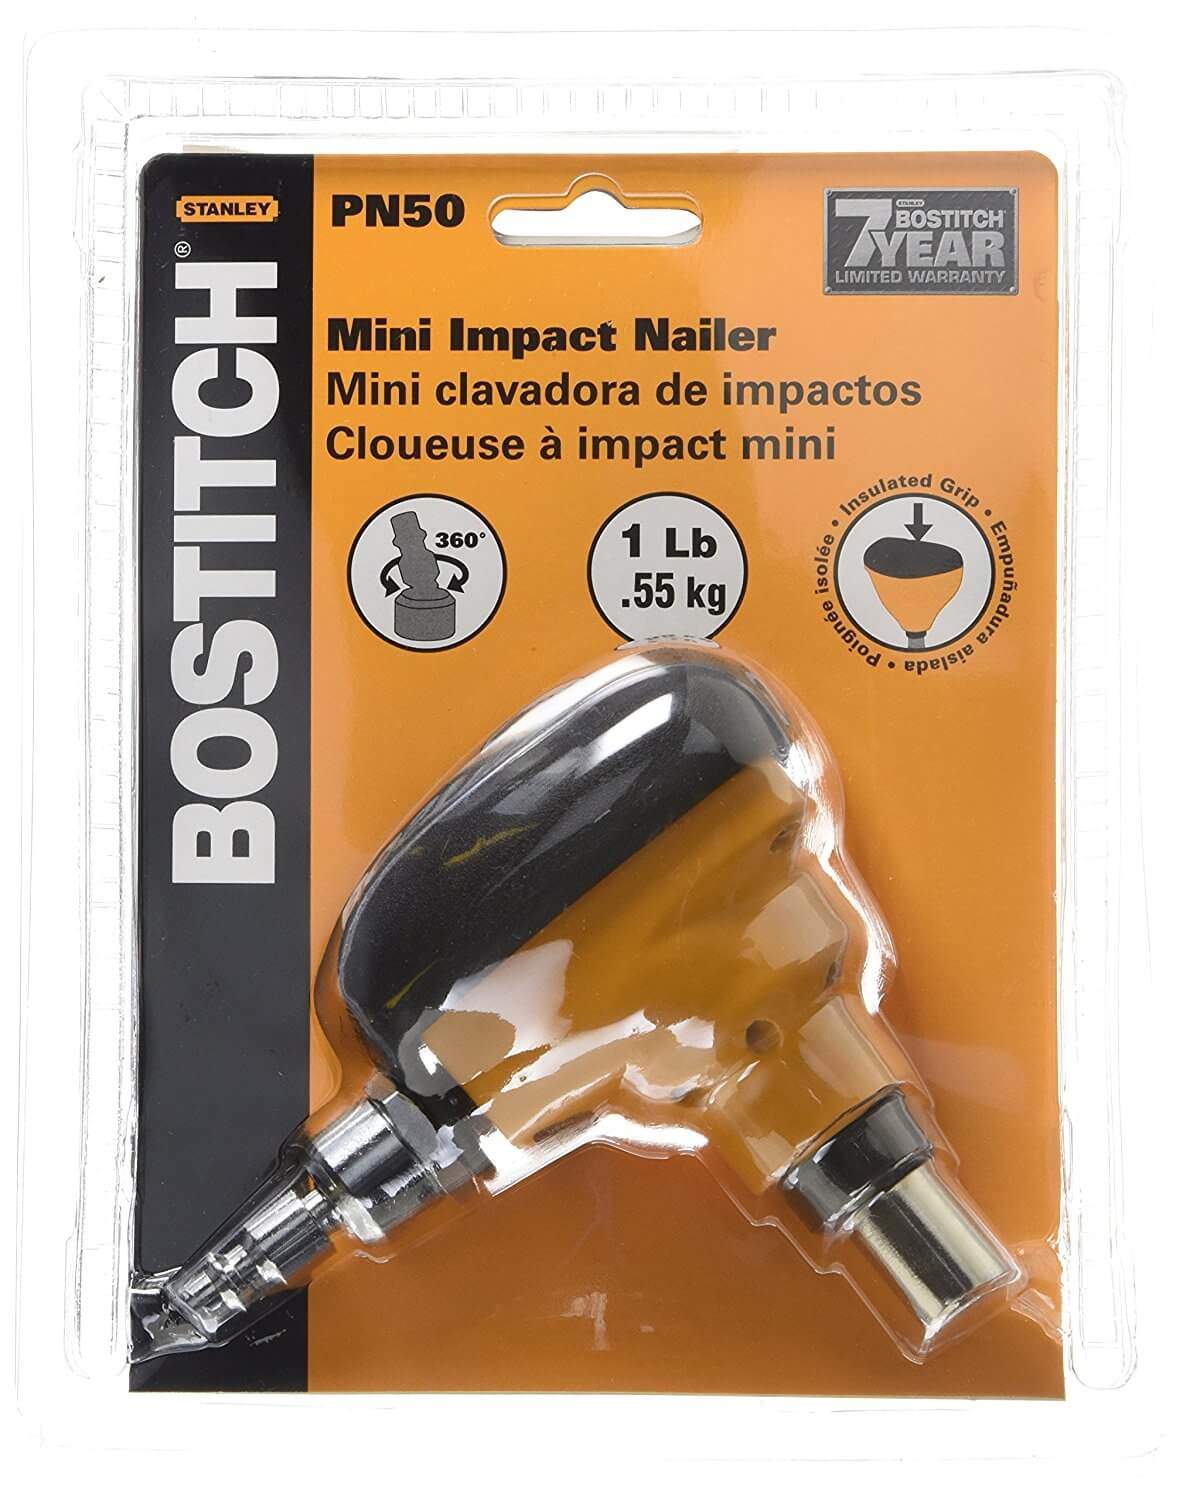 BOSTITCH PN50 Mini Impact Nailer